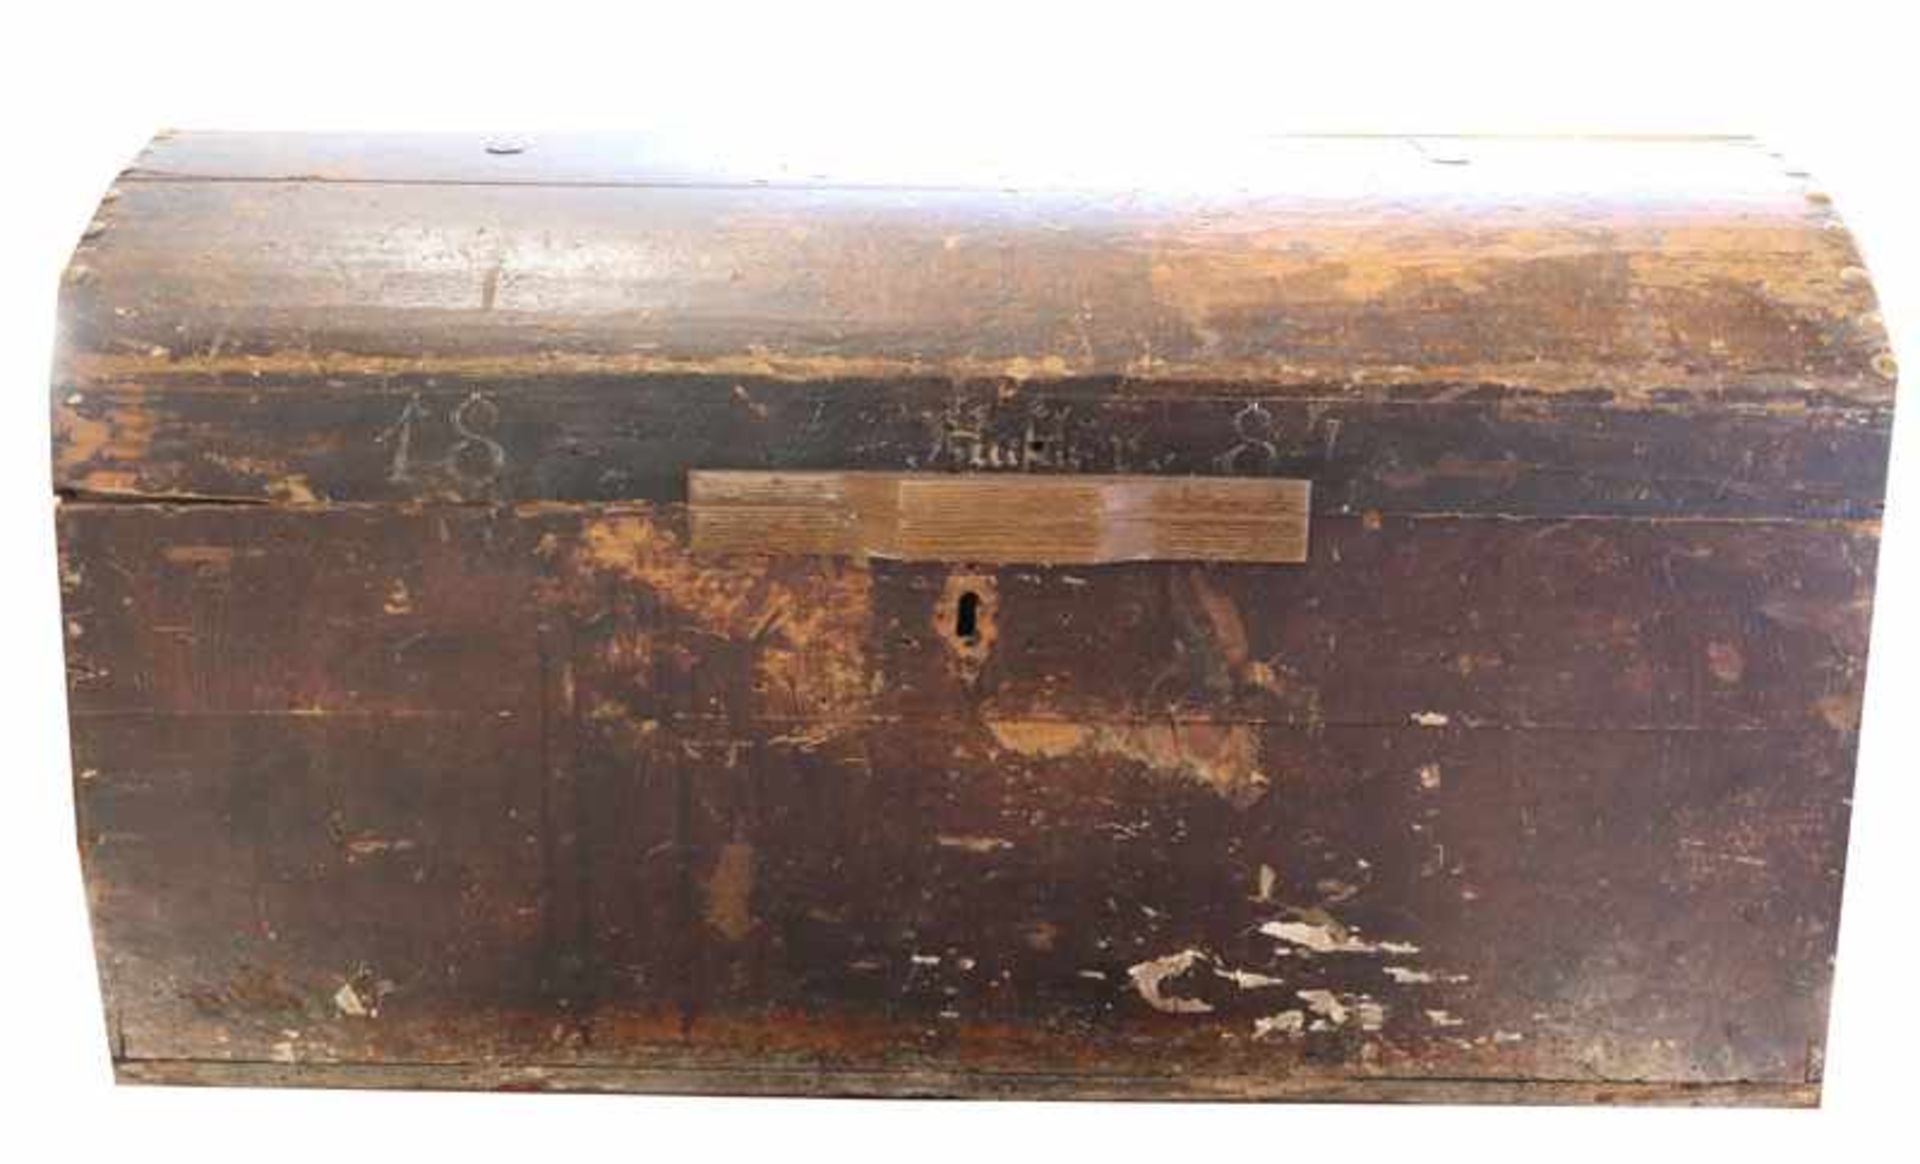 Holztruhe, Korpus mit gewölbtem Deckel, aufklappbar, datiert 1884, H 50 cm, B 96 cm, T 50 cm,